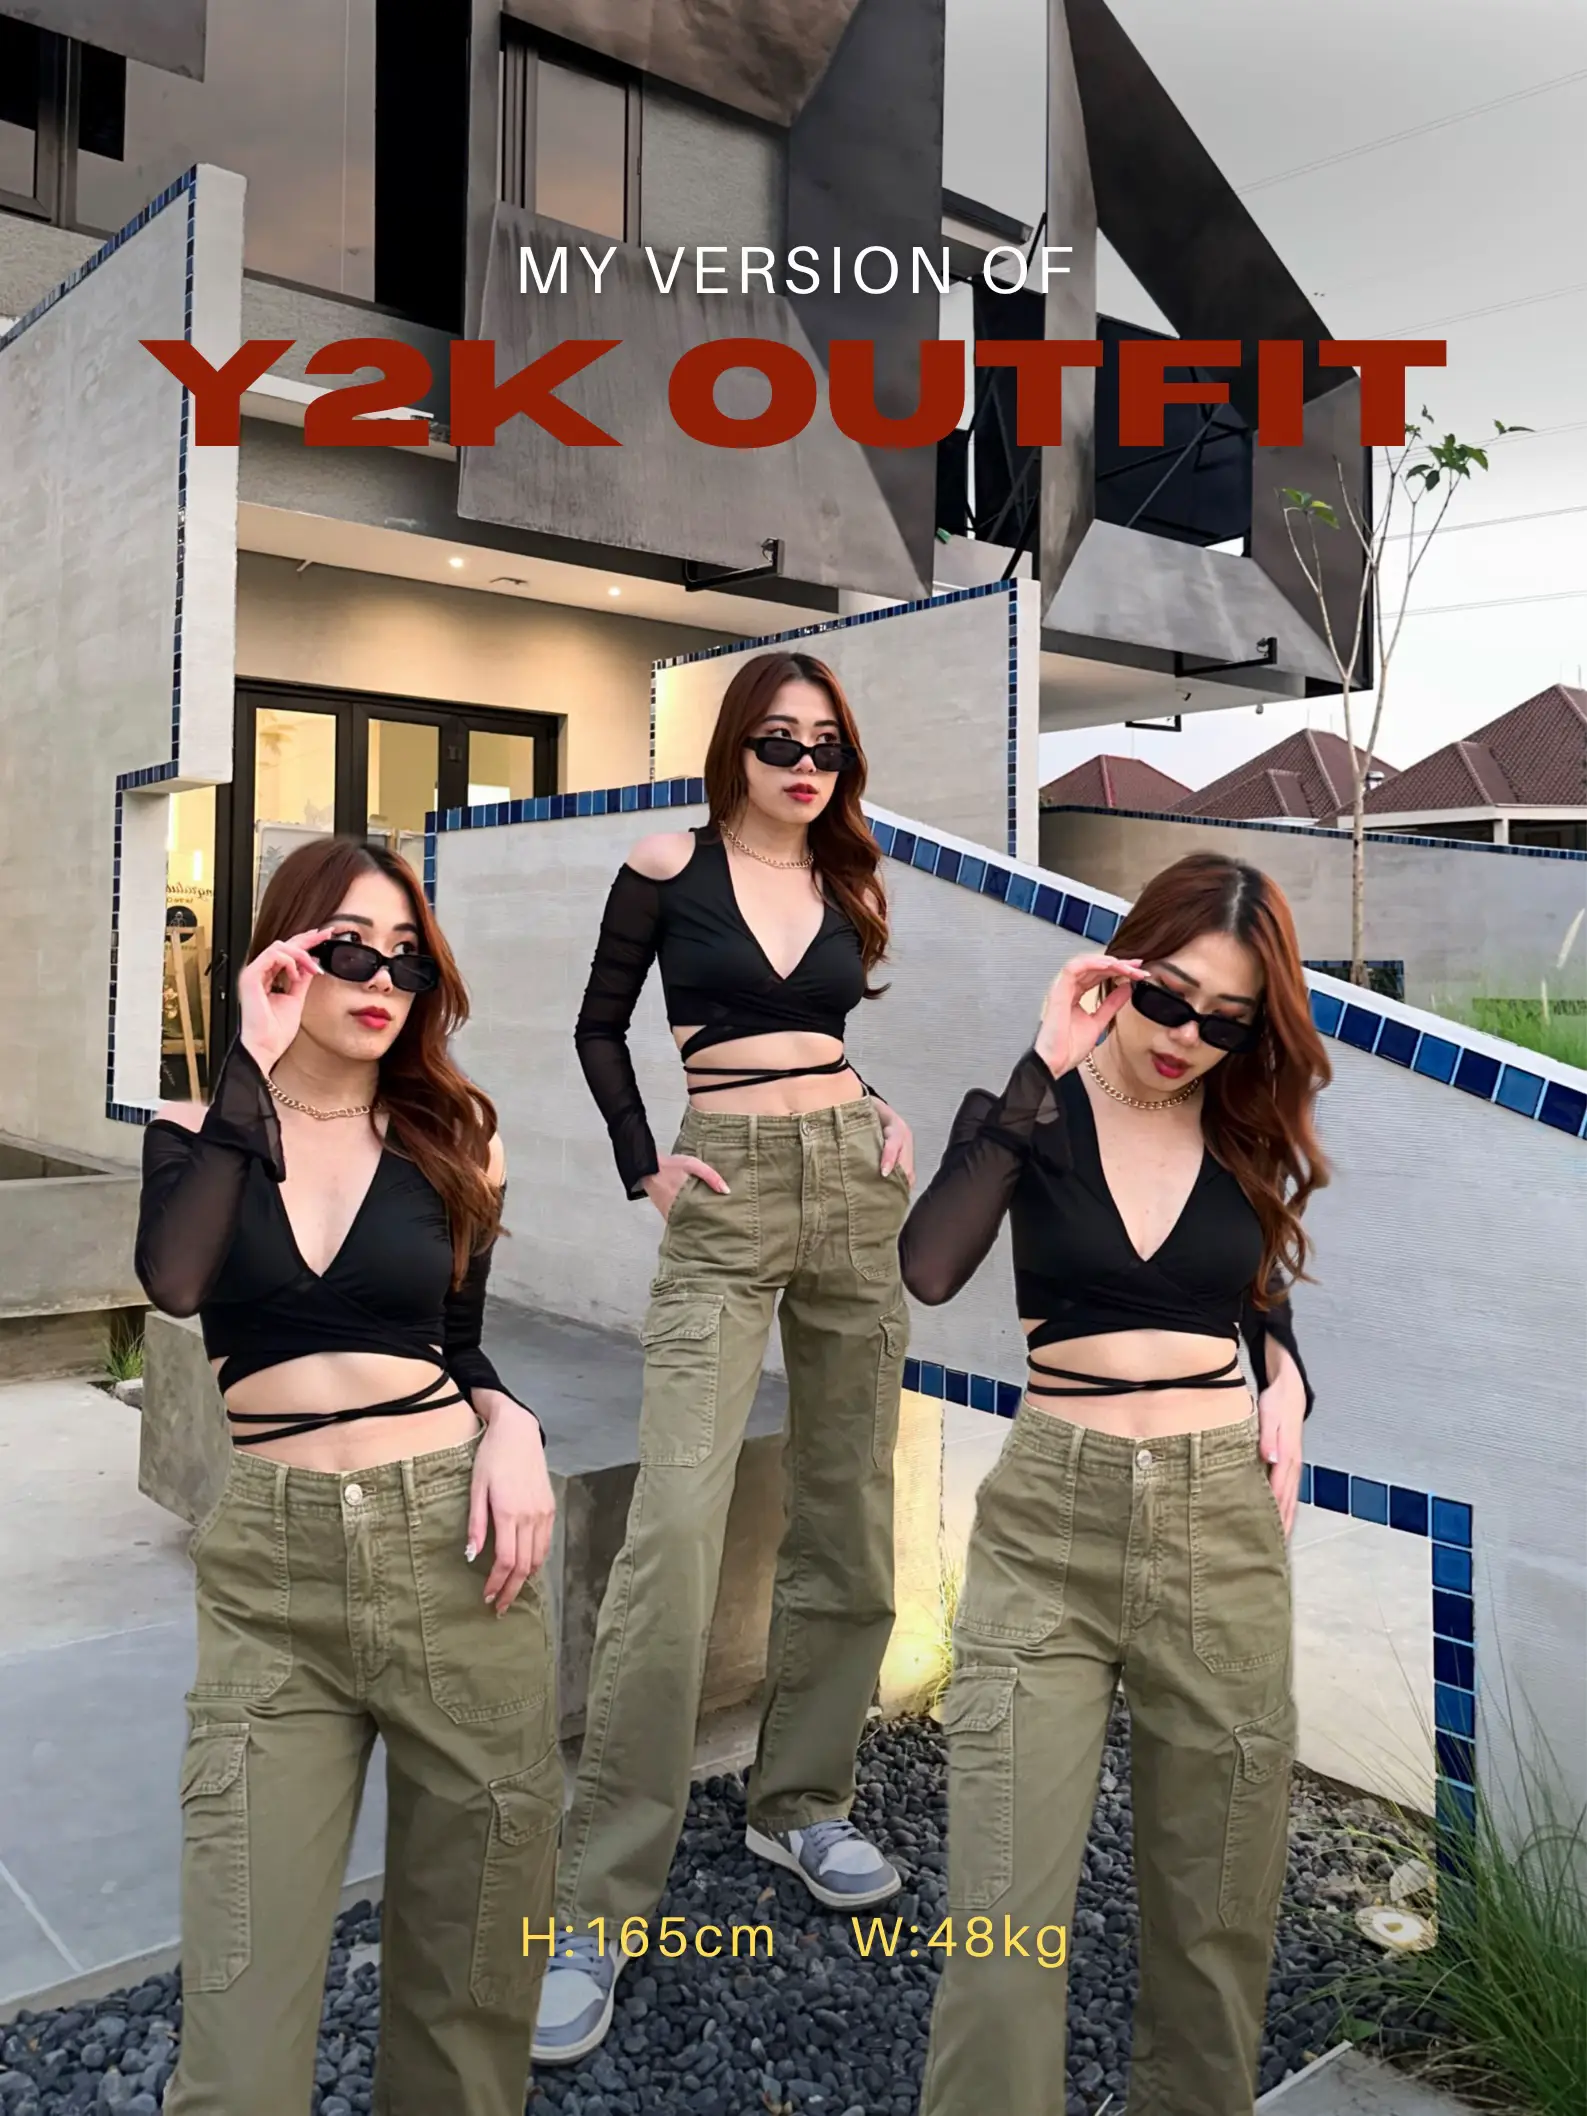 Outfit idea ( y2k girl ) 🤎🎧